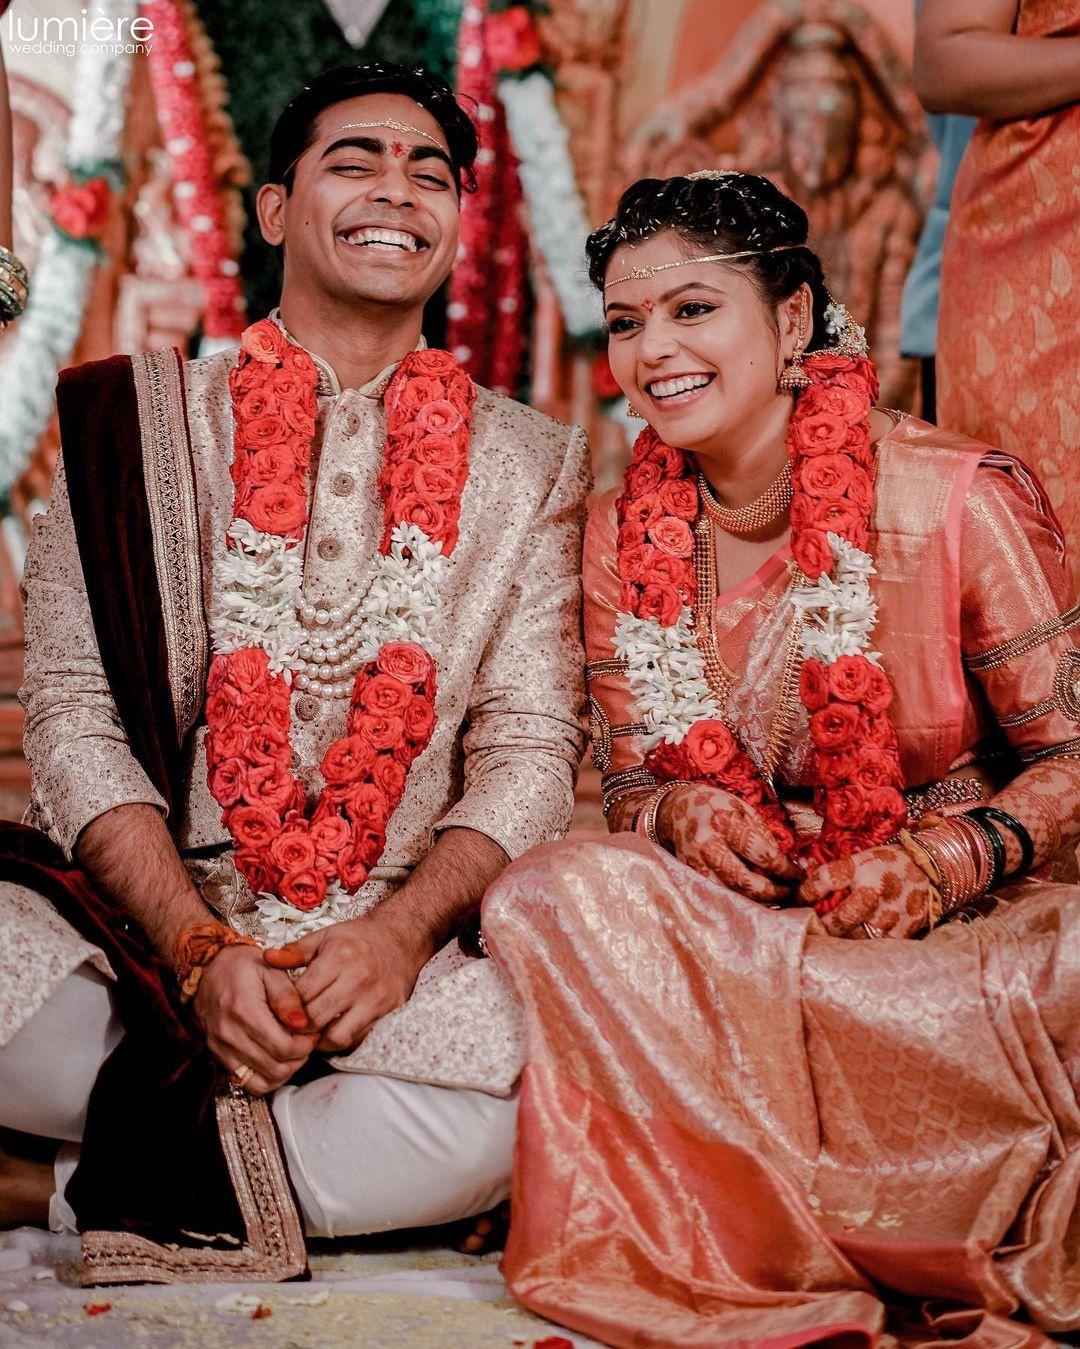 Traditional Hindu Wedding Attire | CrystalView Weddings & Events